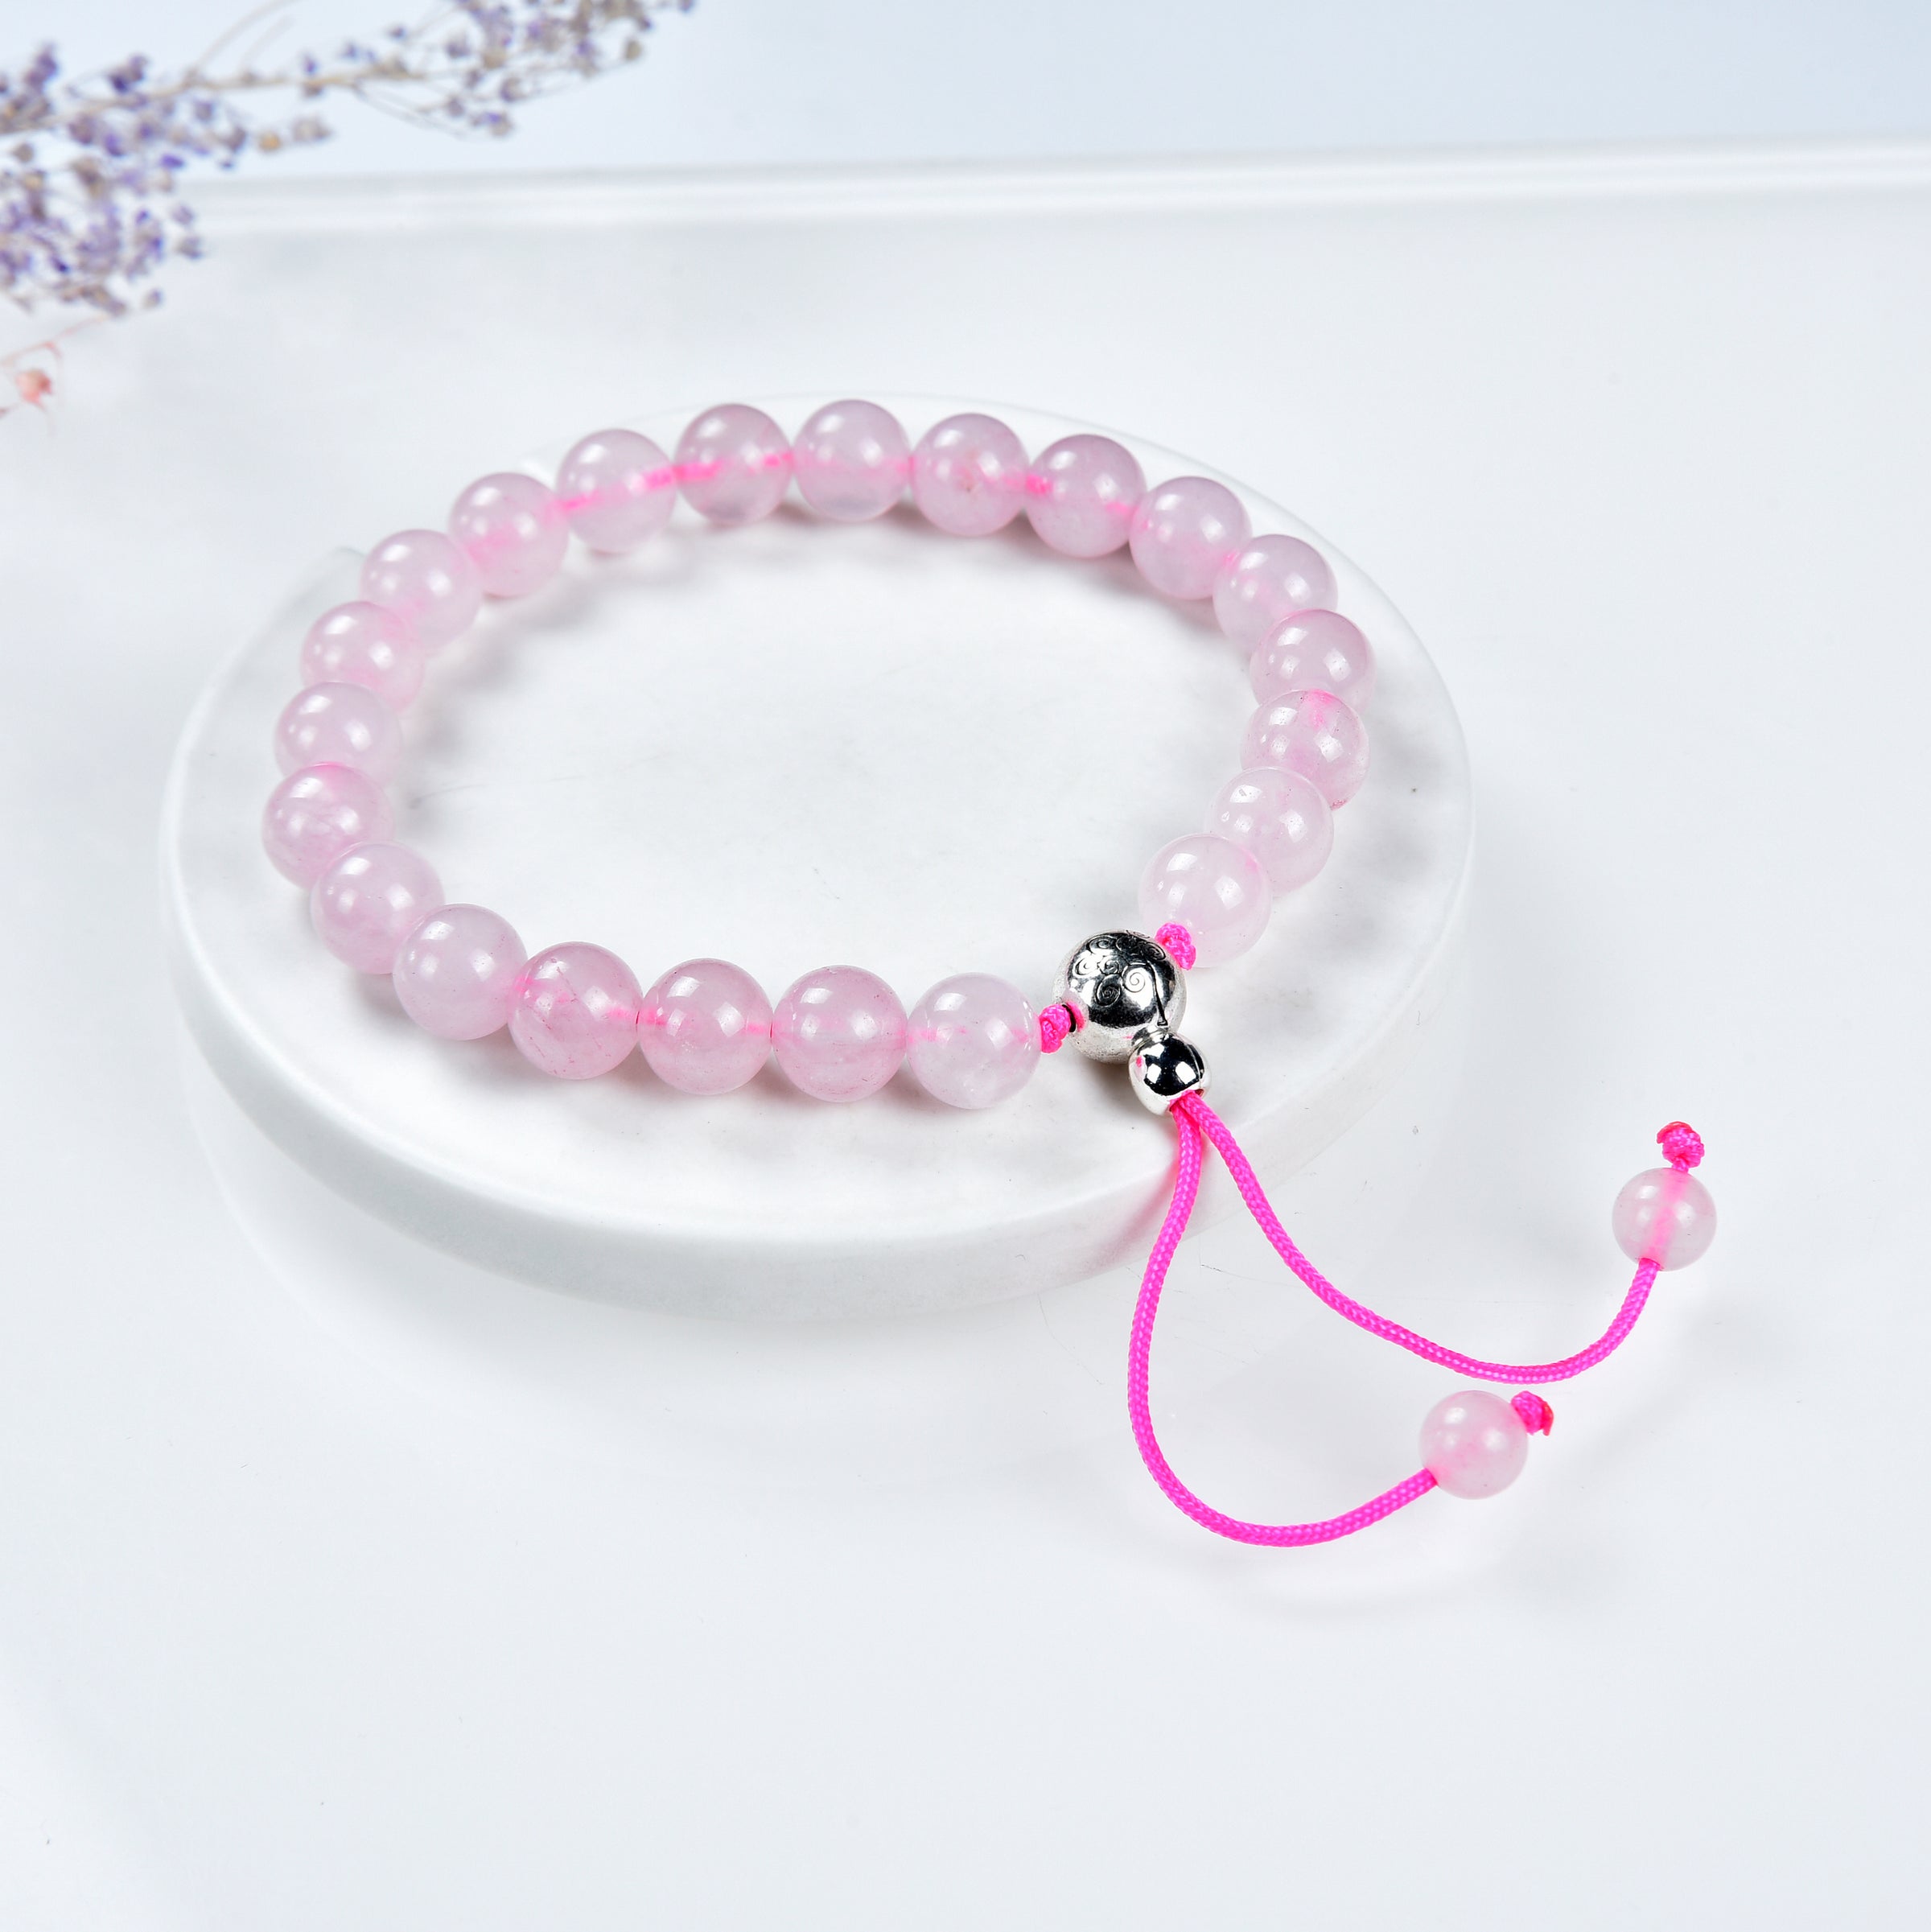 Mala Bracelet  8mm Beads, Guru Bead, Durable Nylon Cord